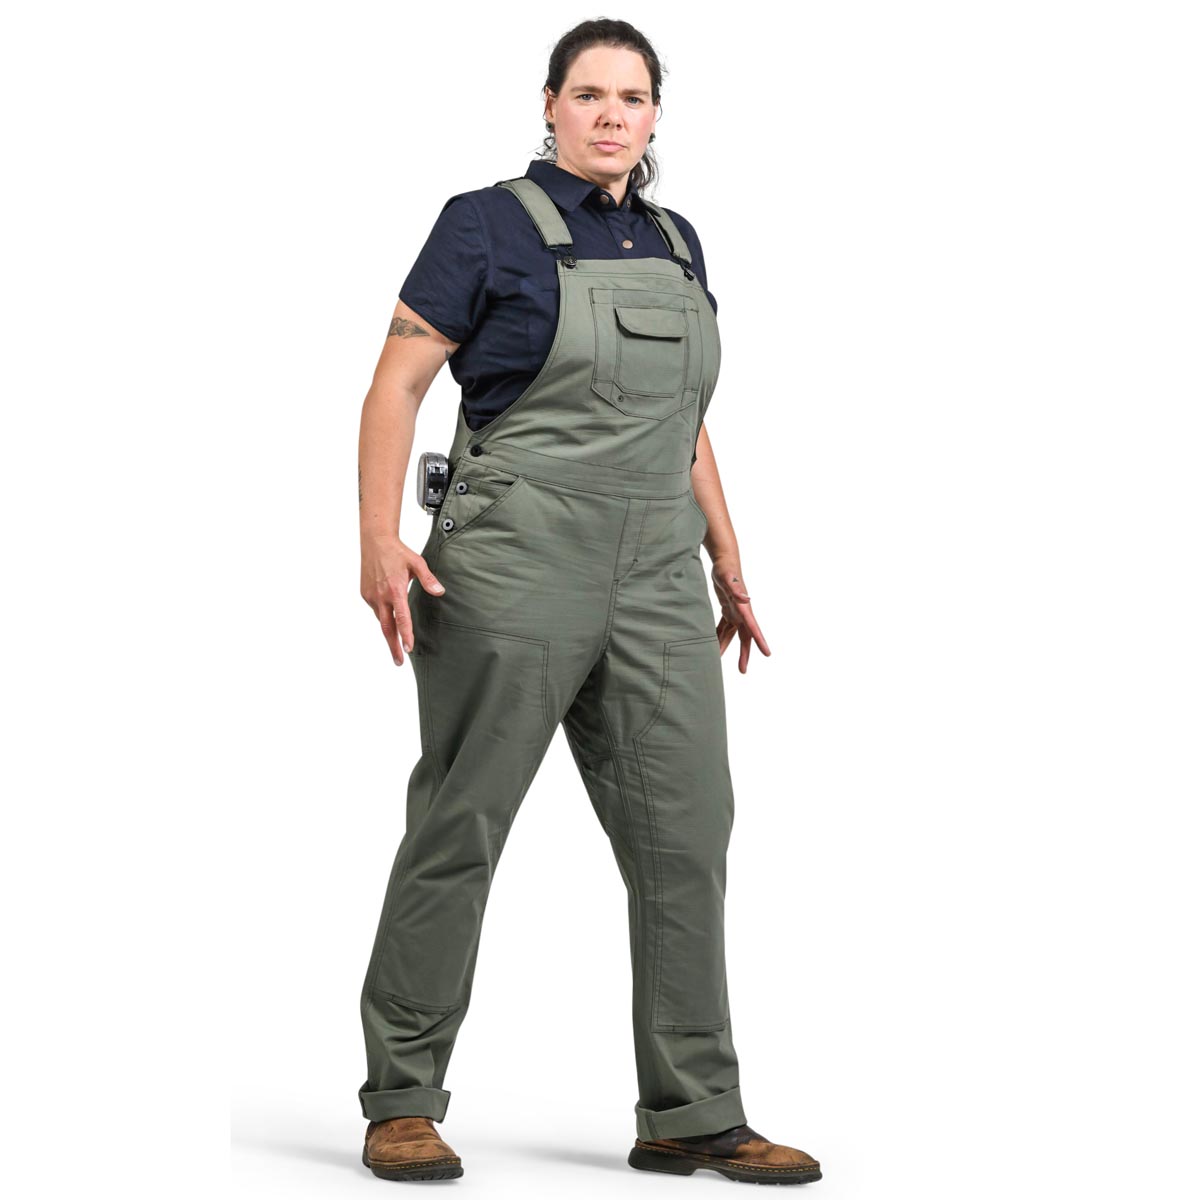 Dovetail Workwear Women's Freshley Overall - Lichen Green Ripstop